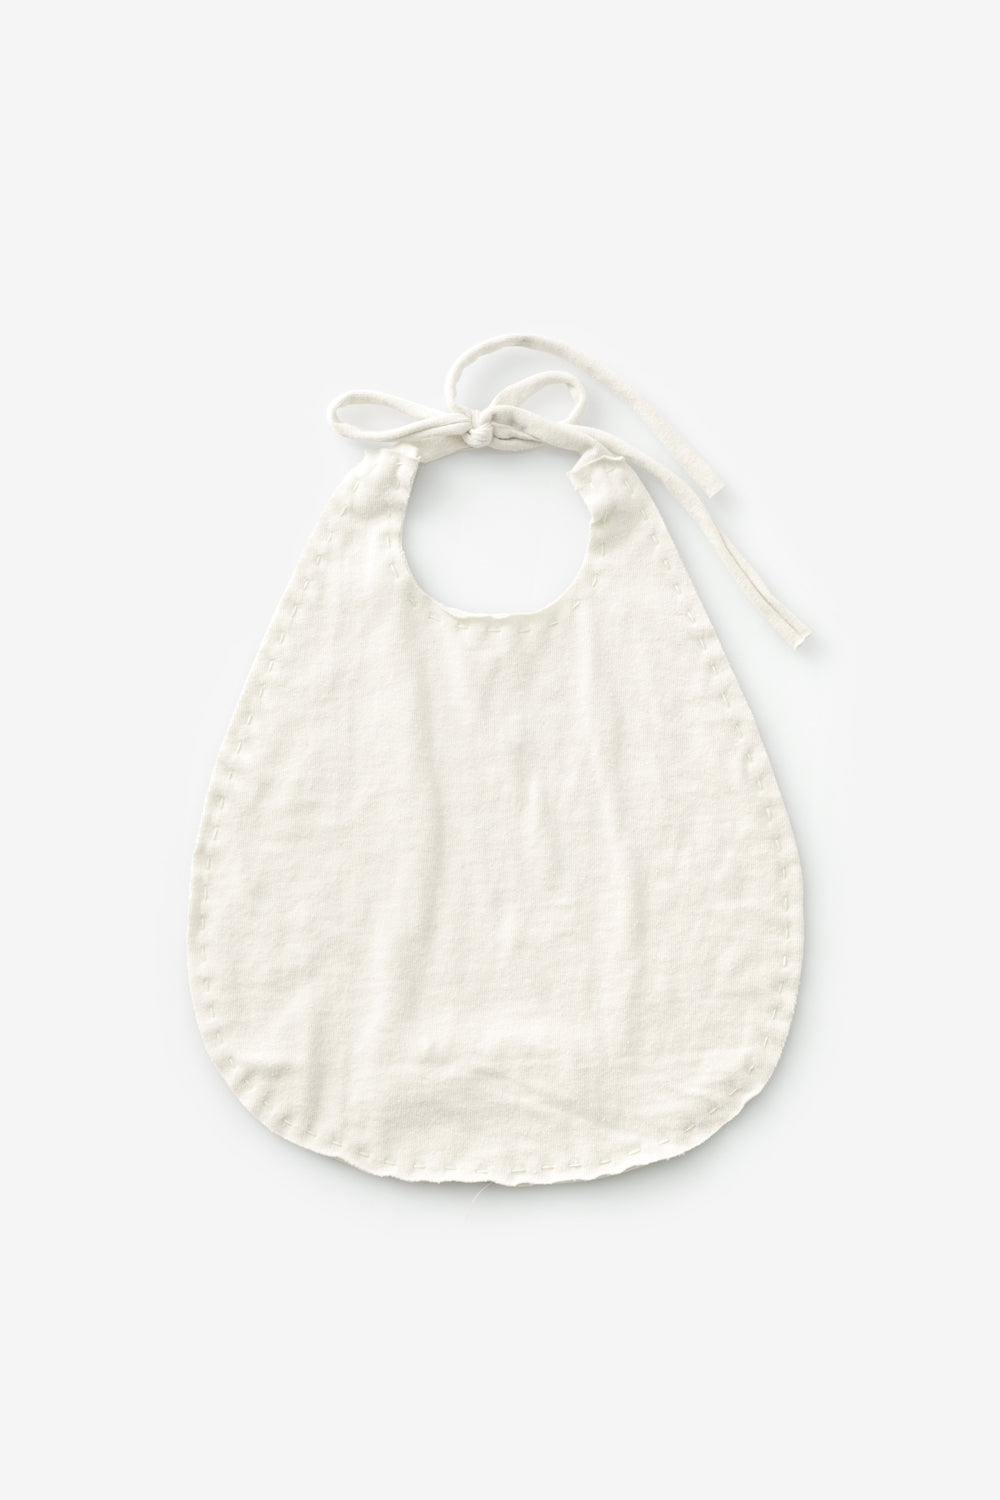 Baby bib in natural organic cotton.